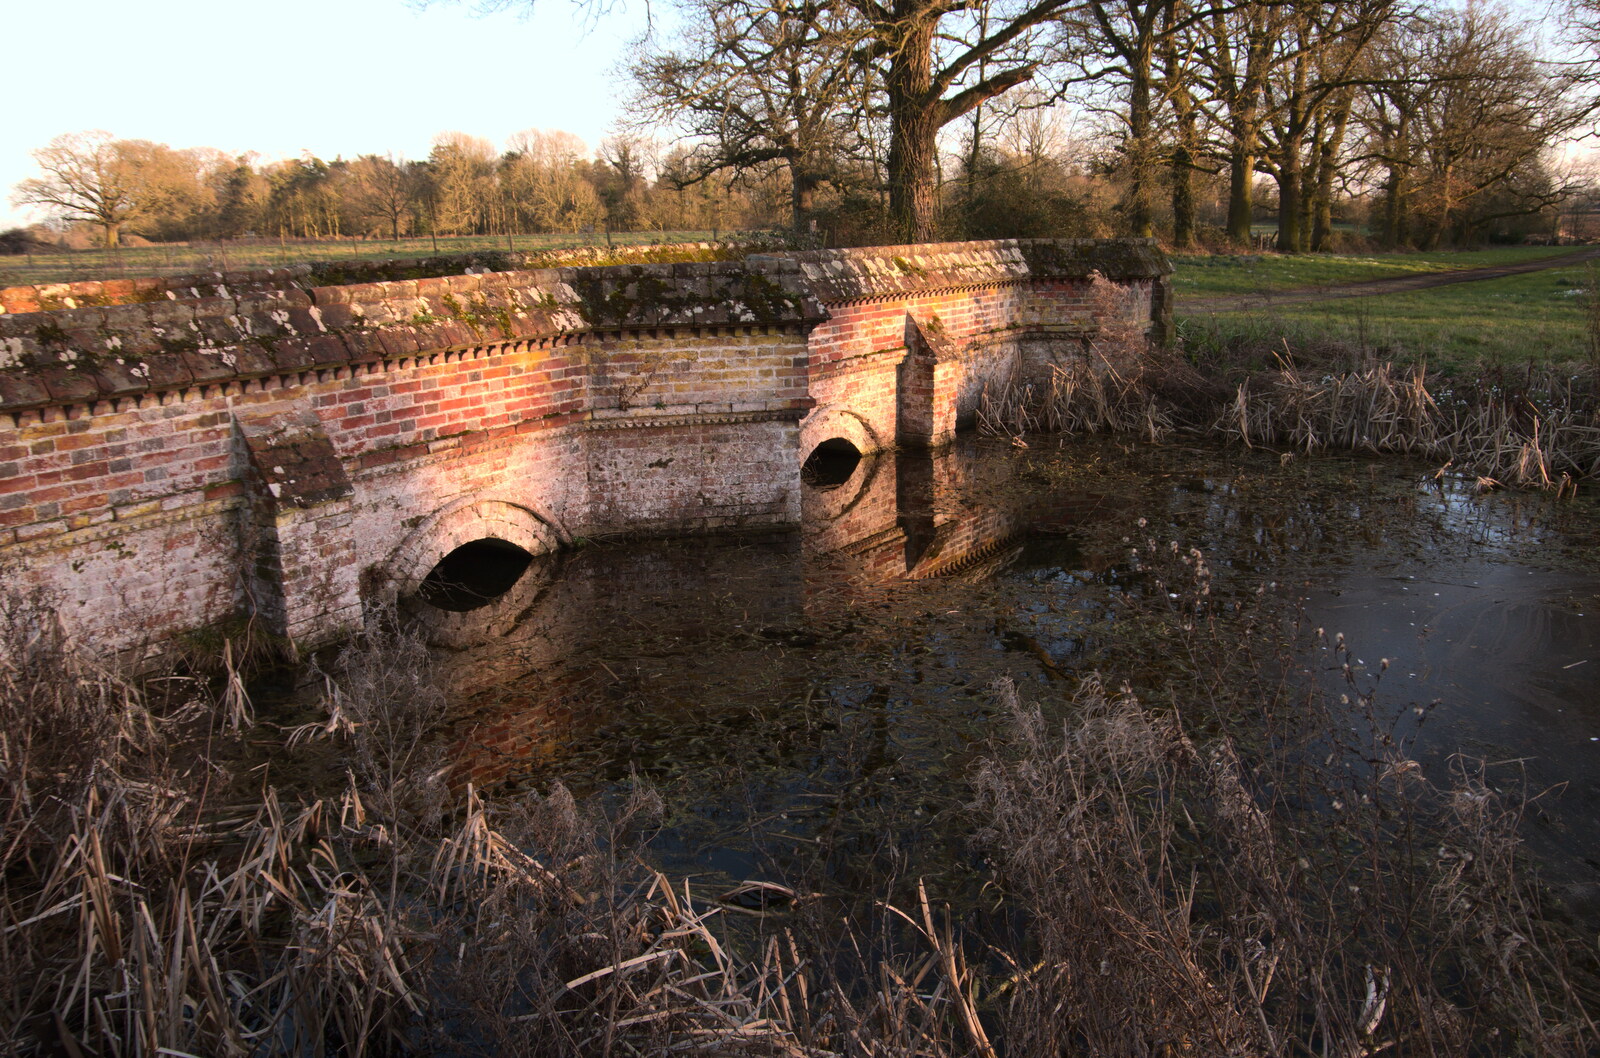 The bridge over the pond from Snowdrops at Talconeston Hall, Tacolneston, Norfolk - 7th February 2020